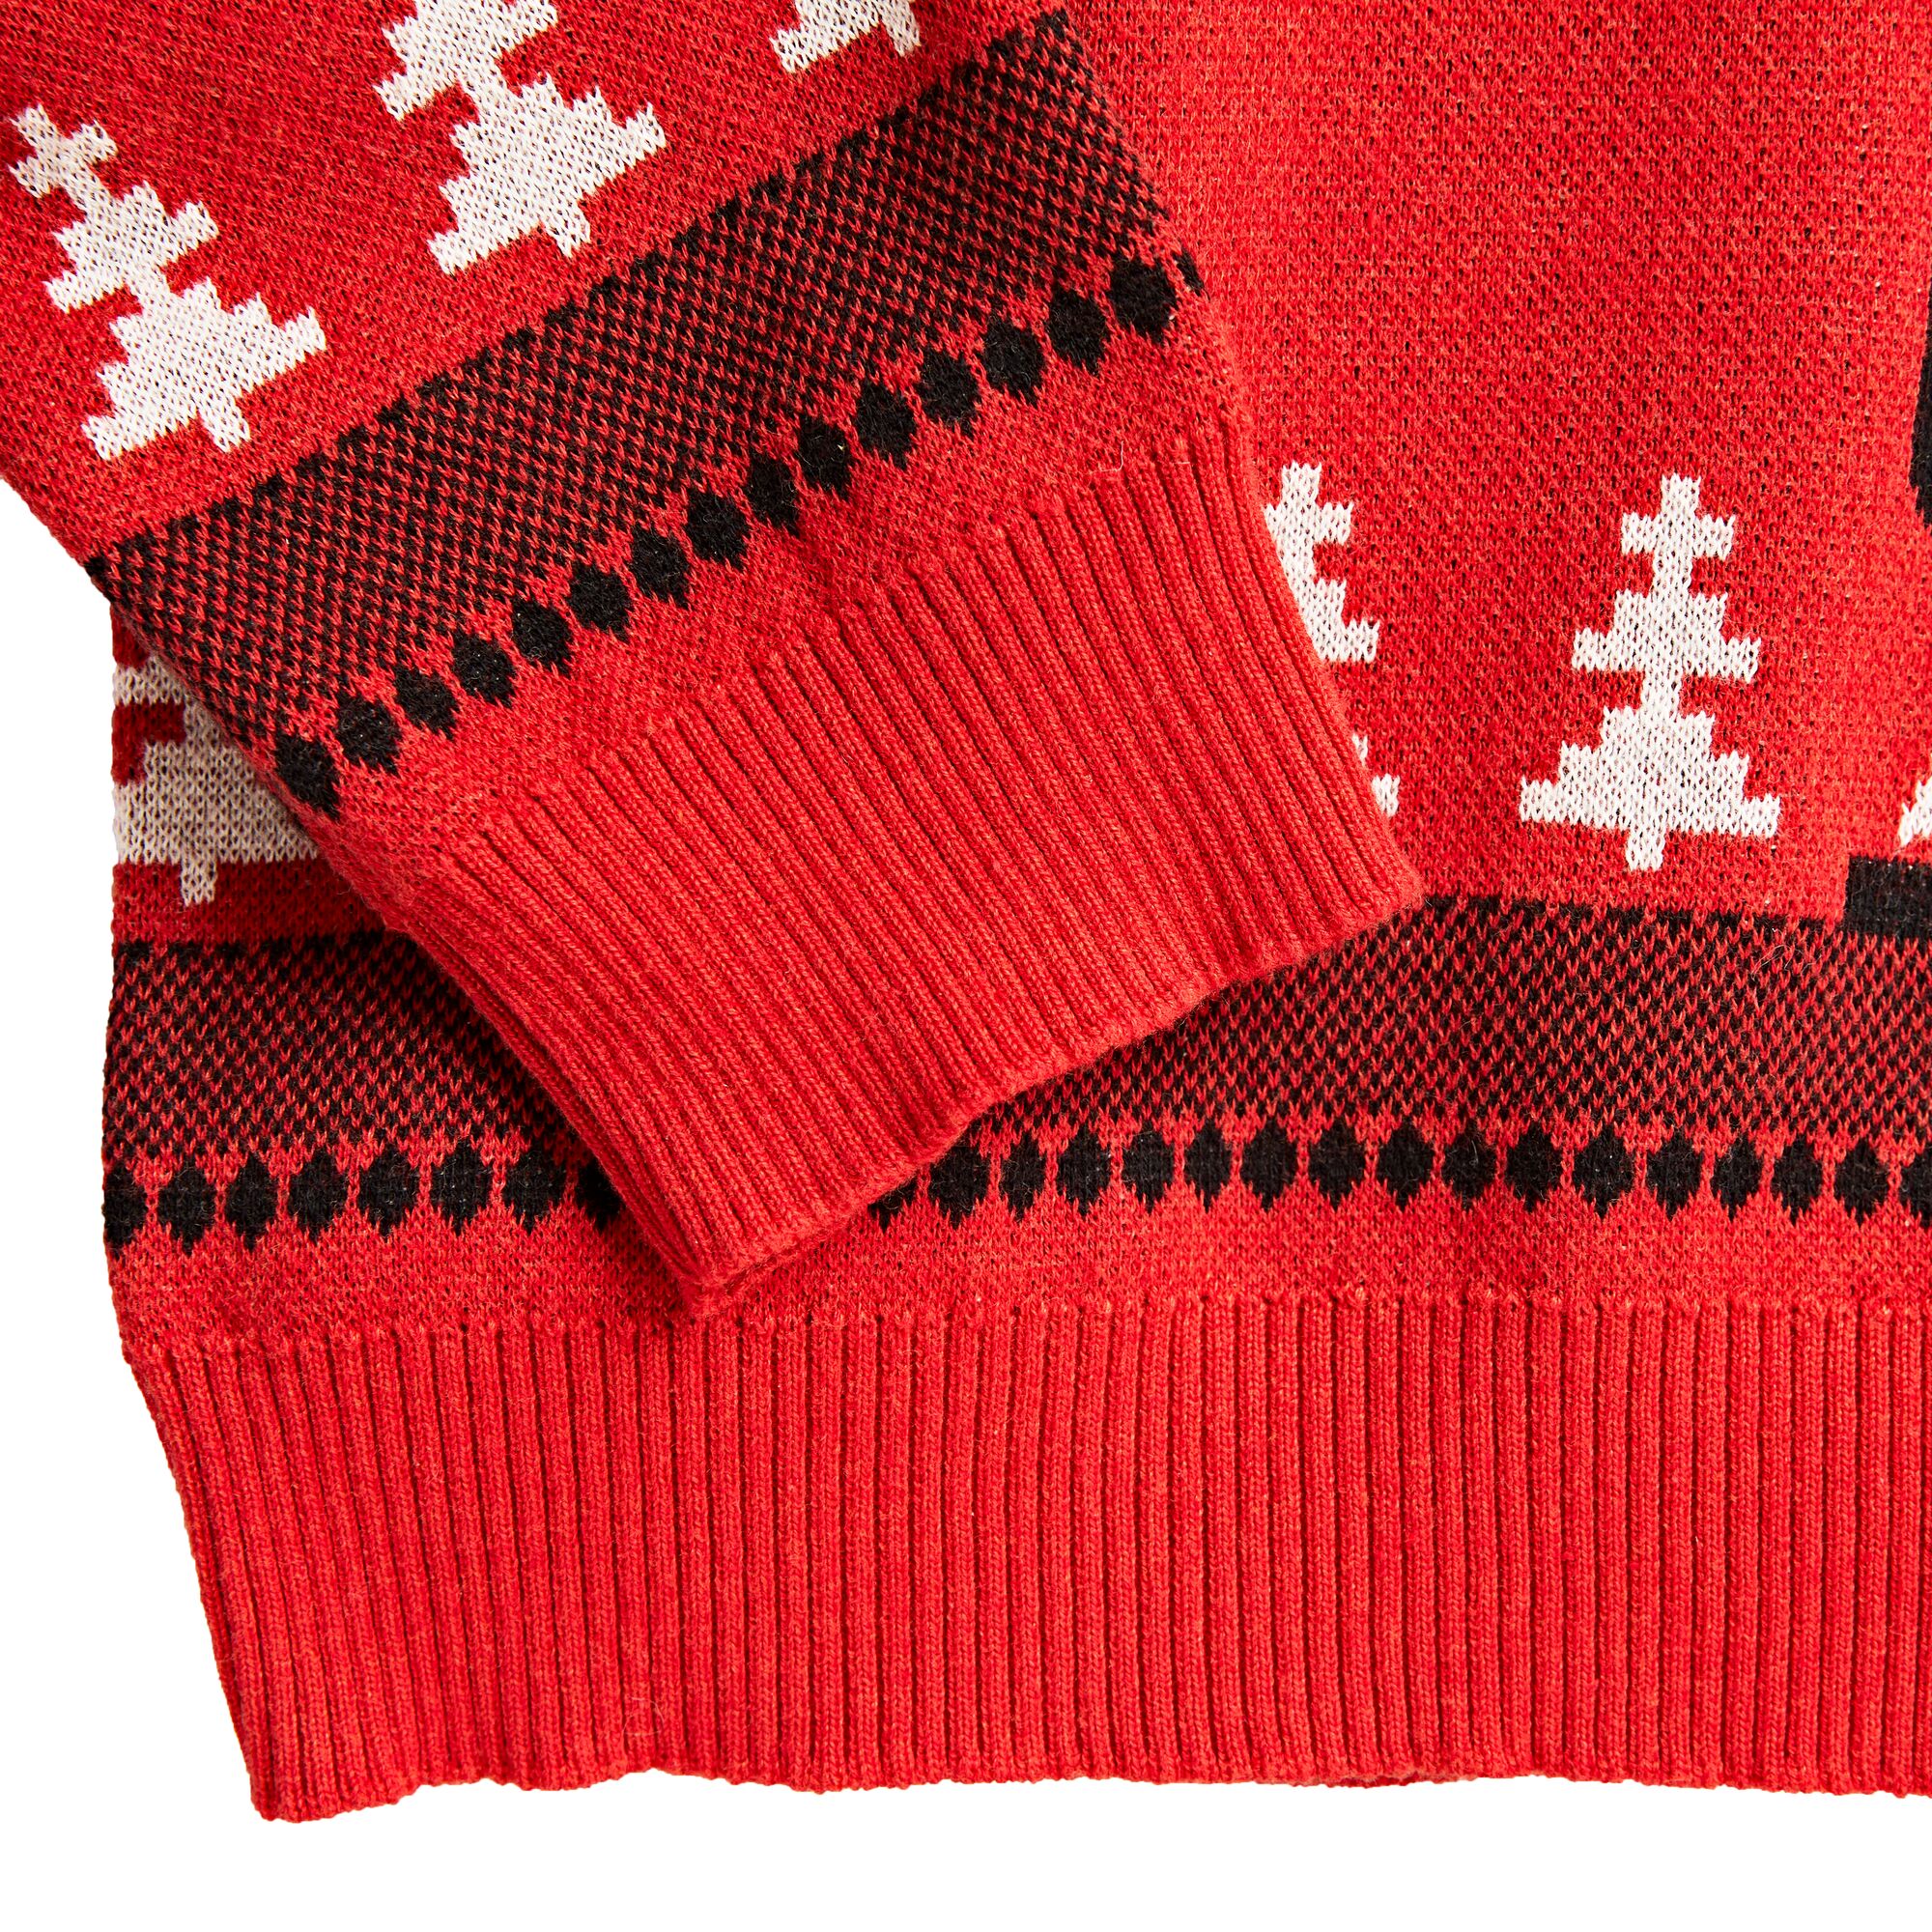 Detail View of CRAFTSMAN Sweater